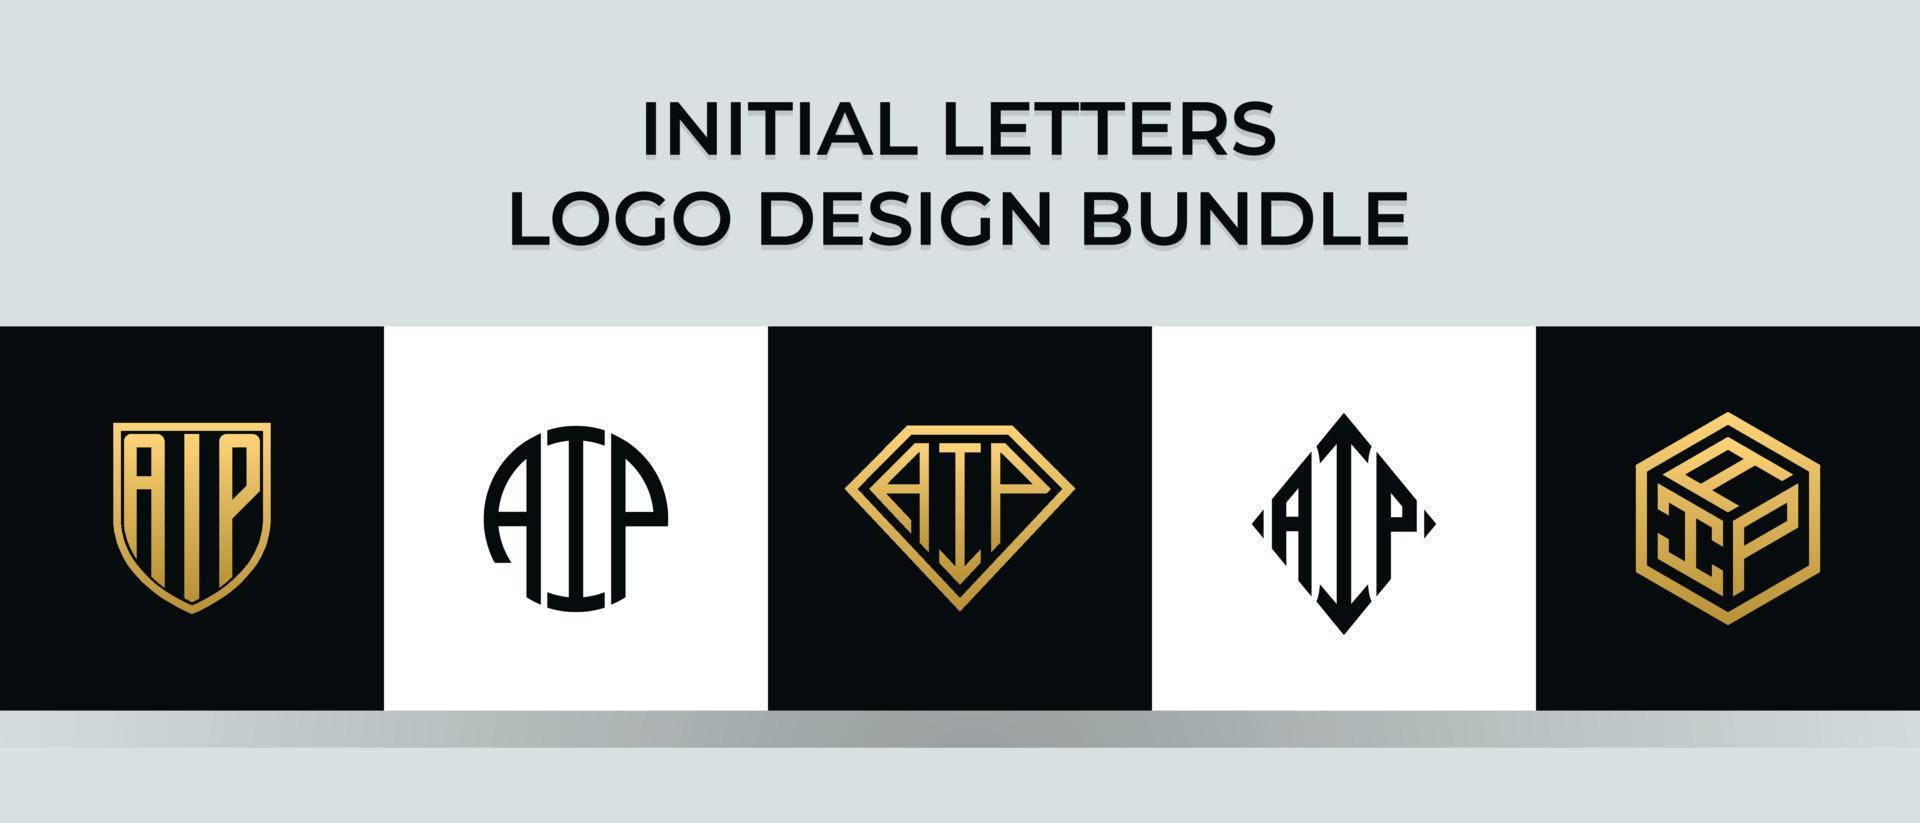 Anfangsbuchstaben aip Logo Designs Bundle vektor